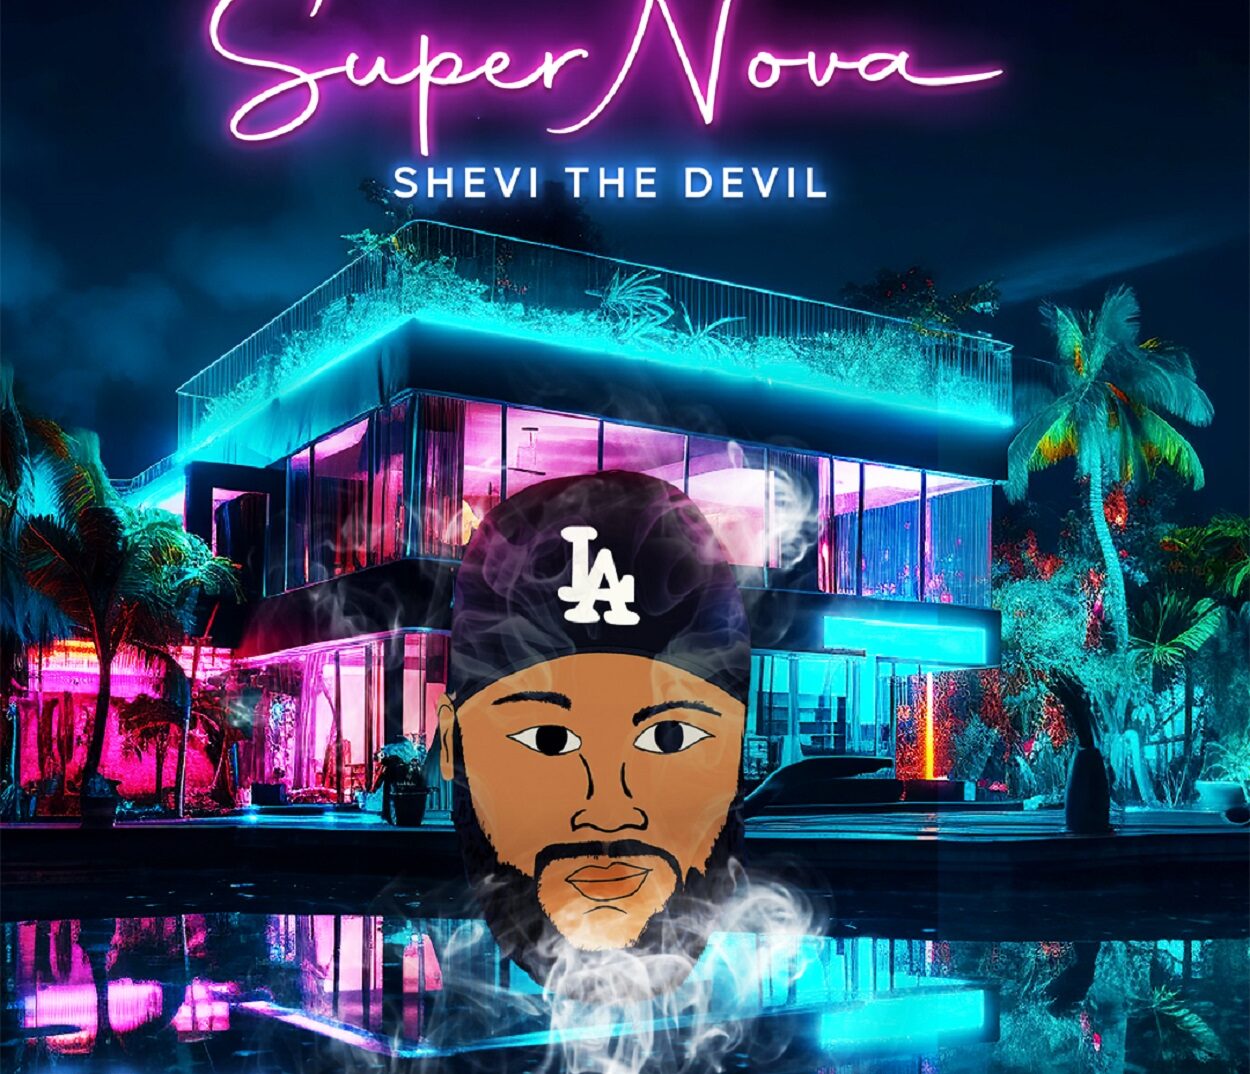 Shevi The Devil’s SuperNova now available